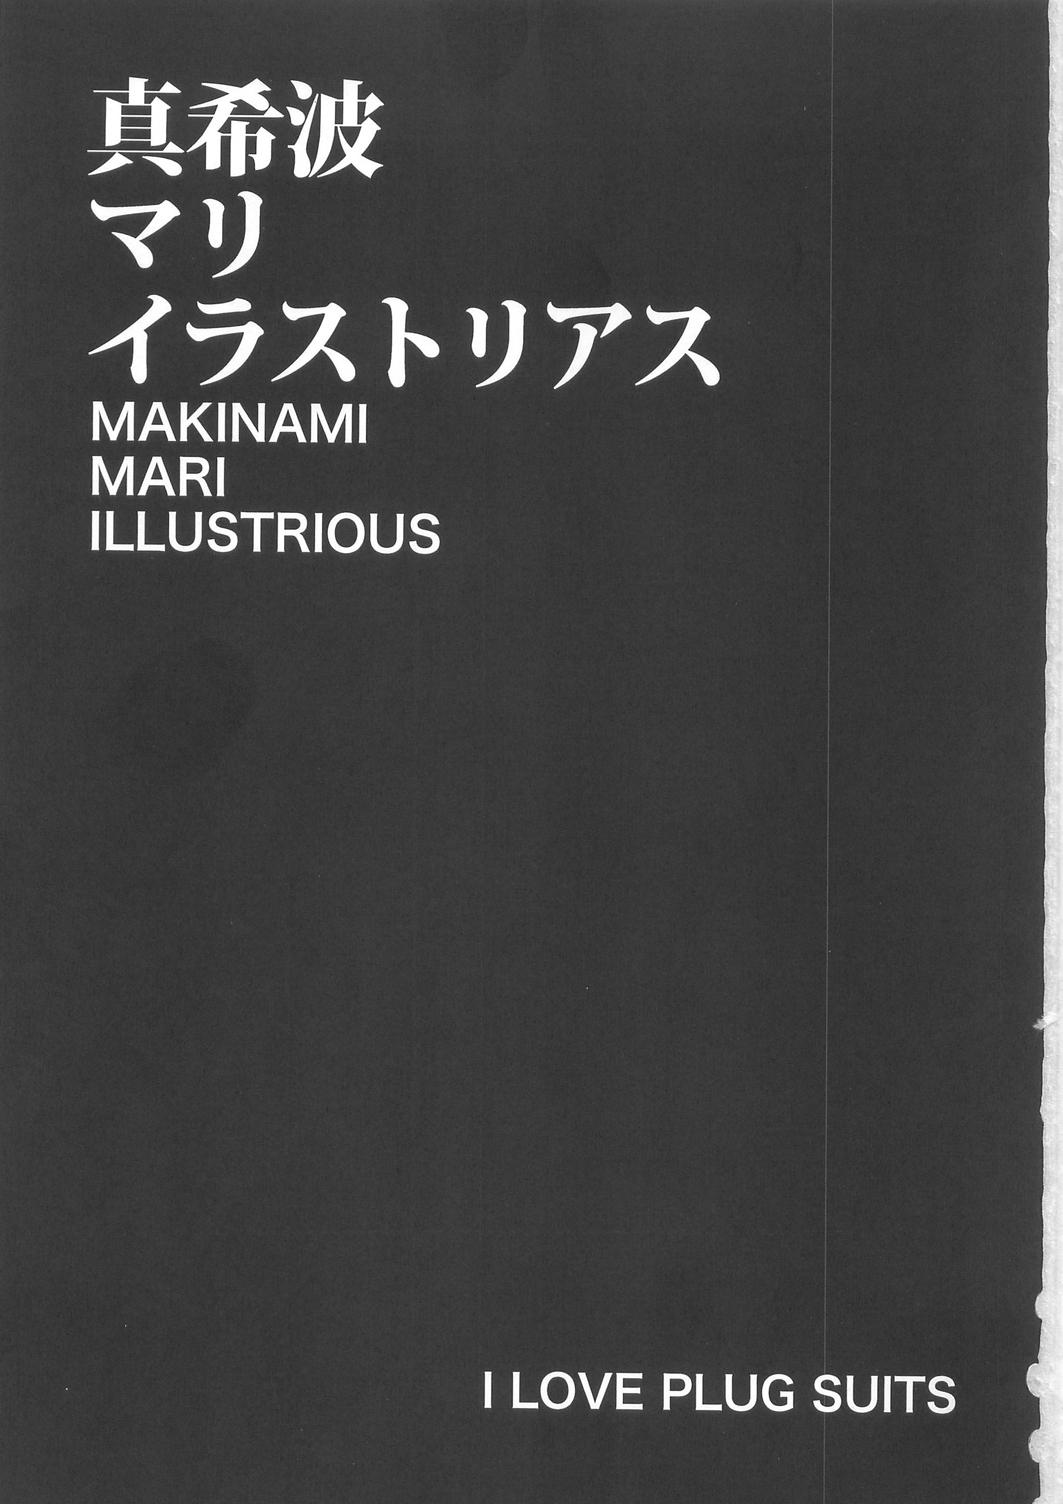 MAKINAMI MARI ILLUSTRIOUS BOOK 2